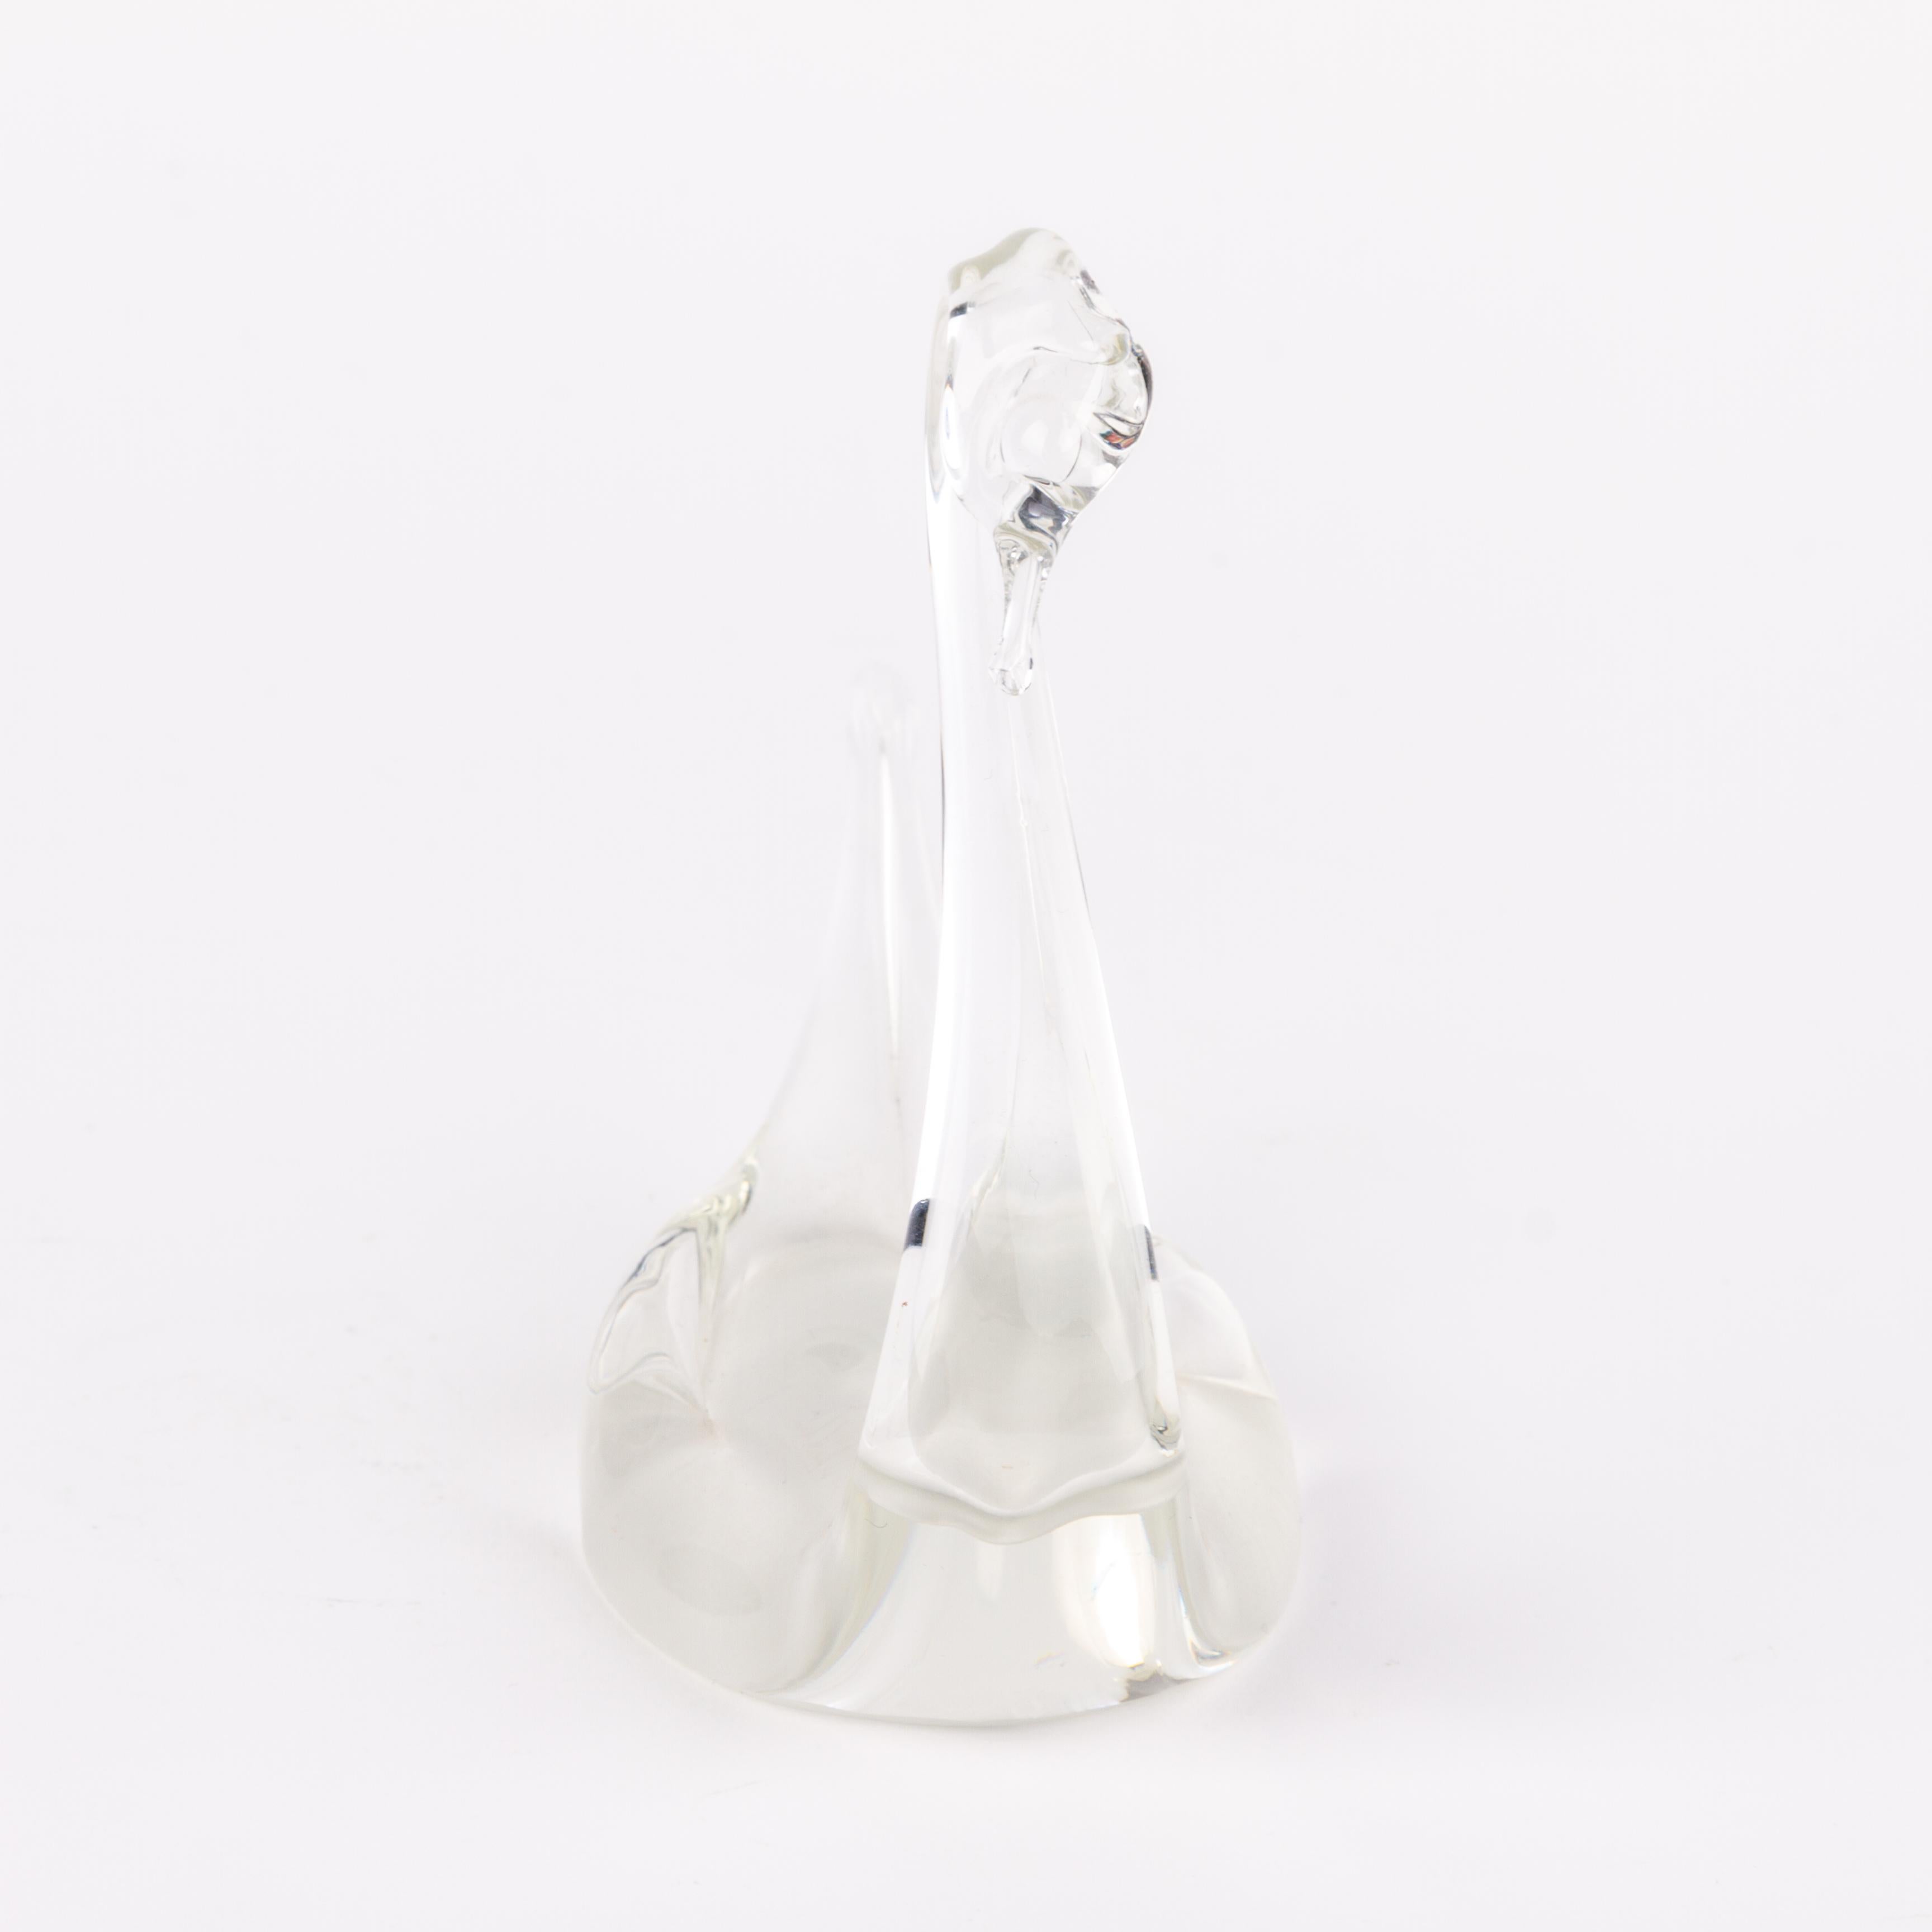 Murano Venetian Glass Designer Sculpture Swan
Good condition
Free international shipping.